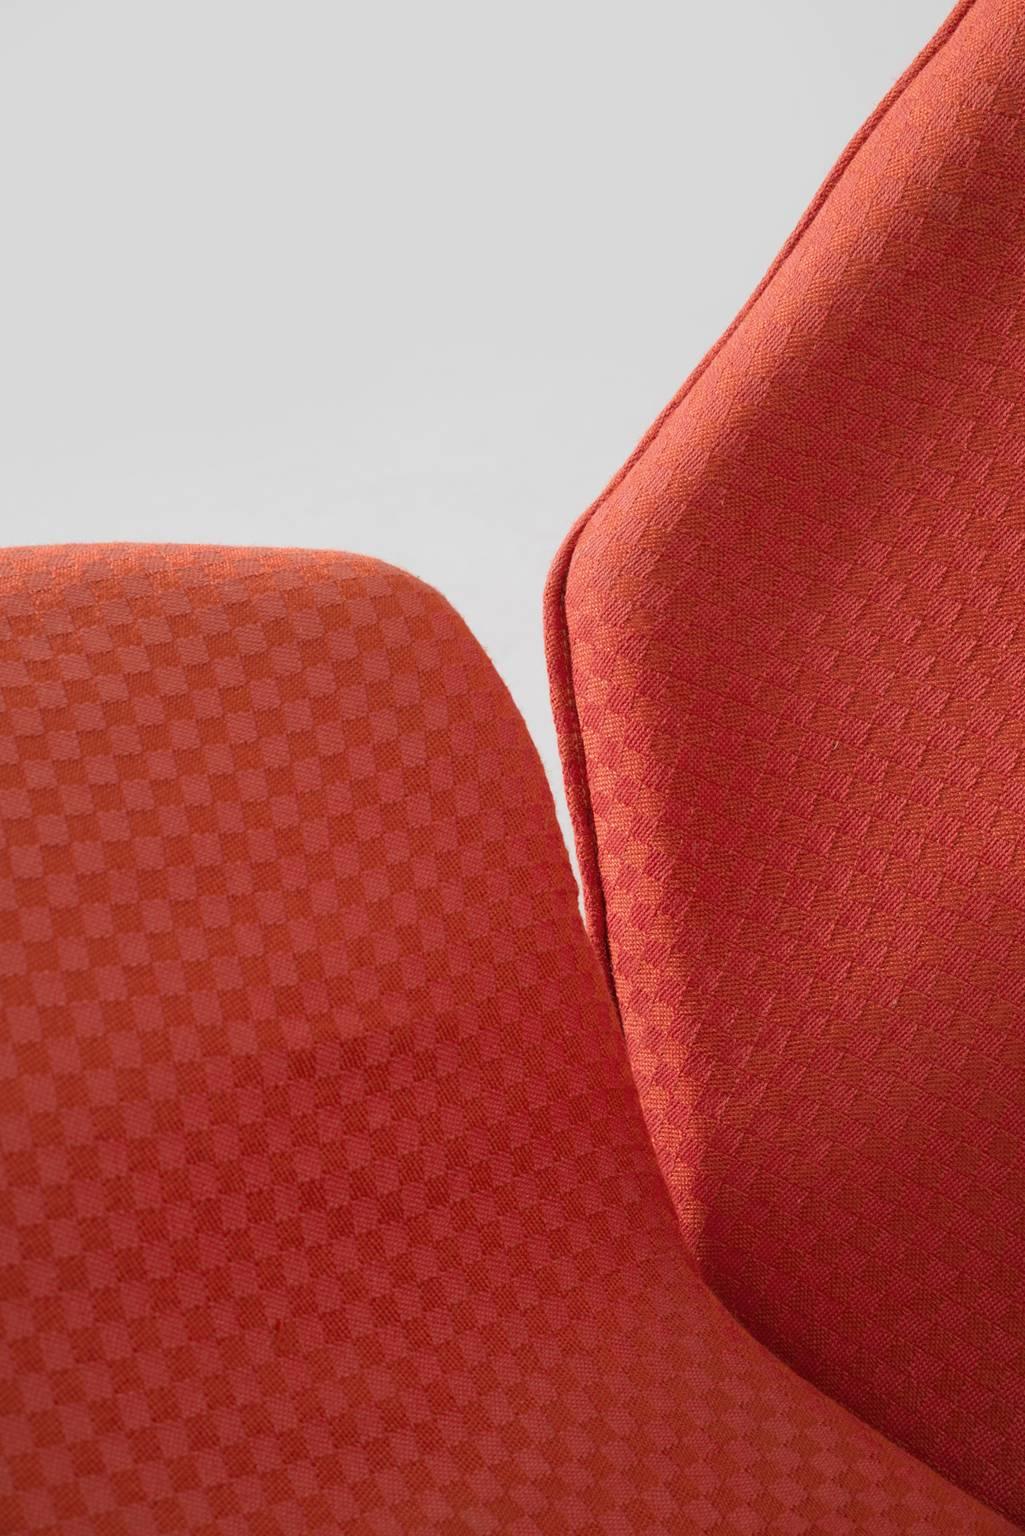 Mid-20th Century Augusto Bozzi Adjustable Orange Lounge Chair for Saporiti